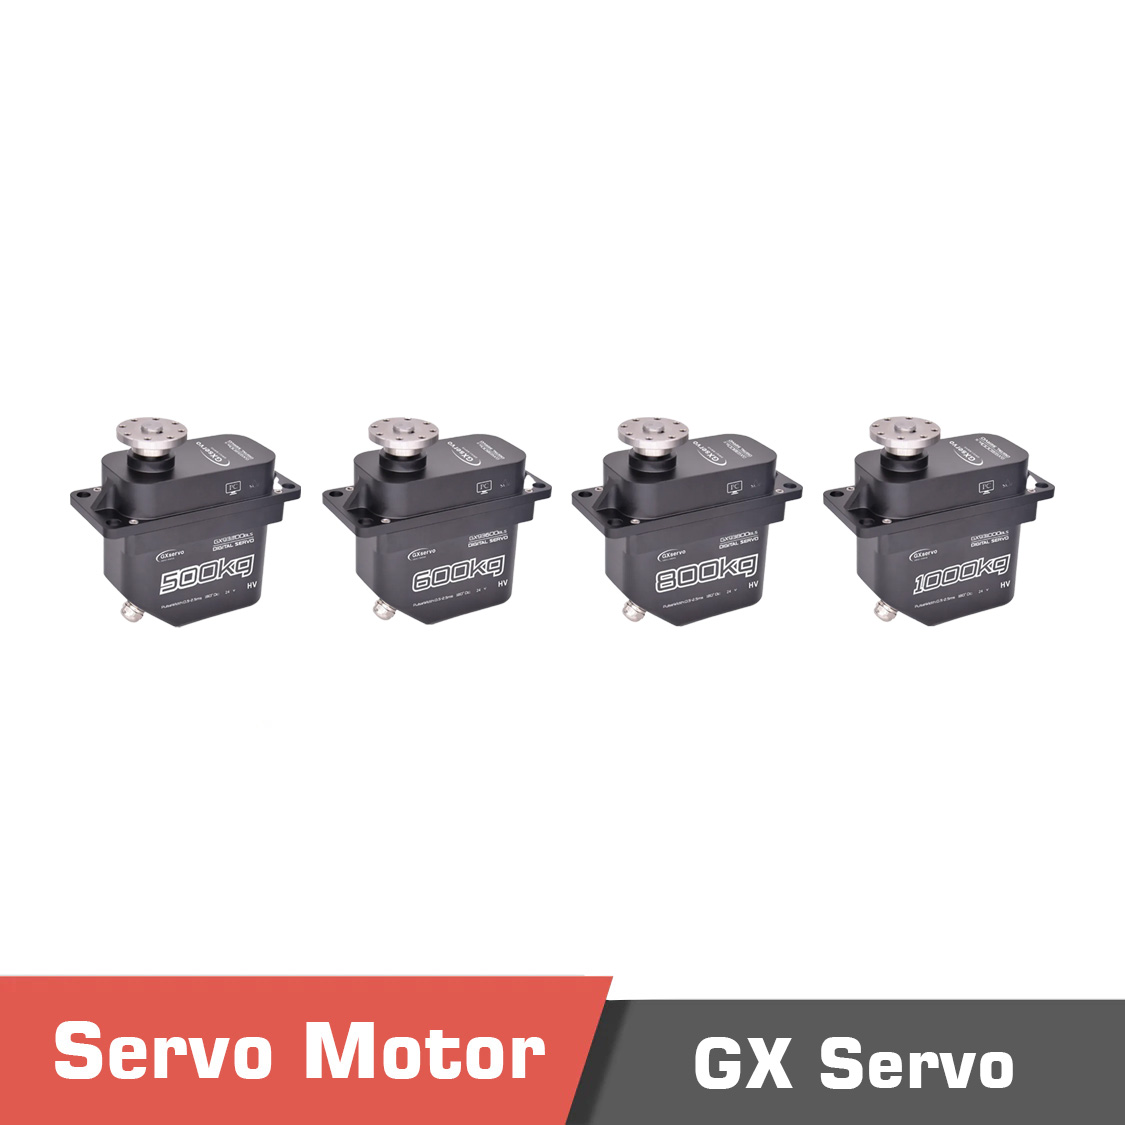 Gx servo - super 300,super 500,servo,high torque servo motor,metal servo,bec,pwm control,analog  control,analog servo control,pwm servo control,high torque metal servo - motionew - 1